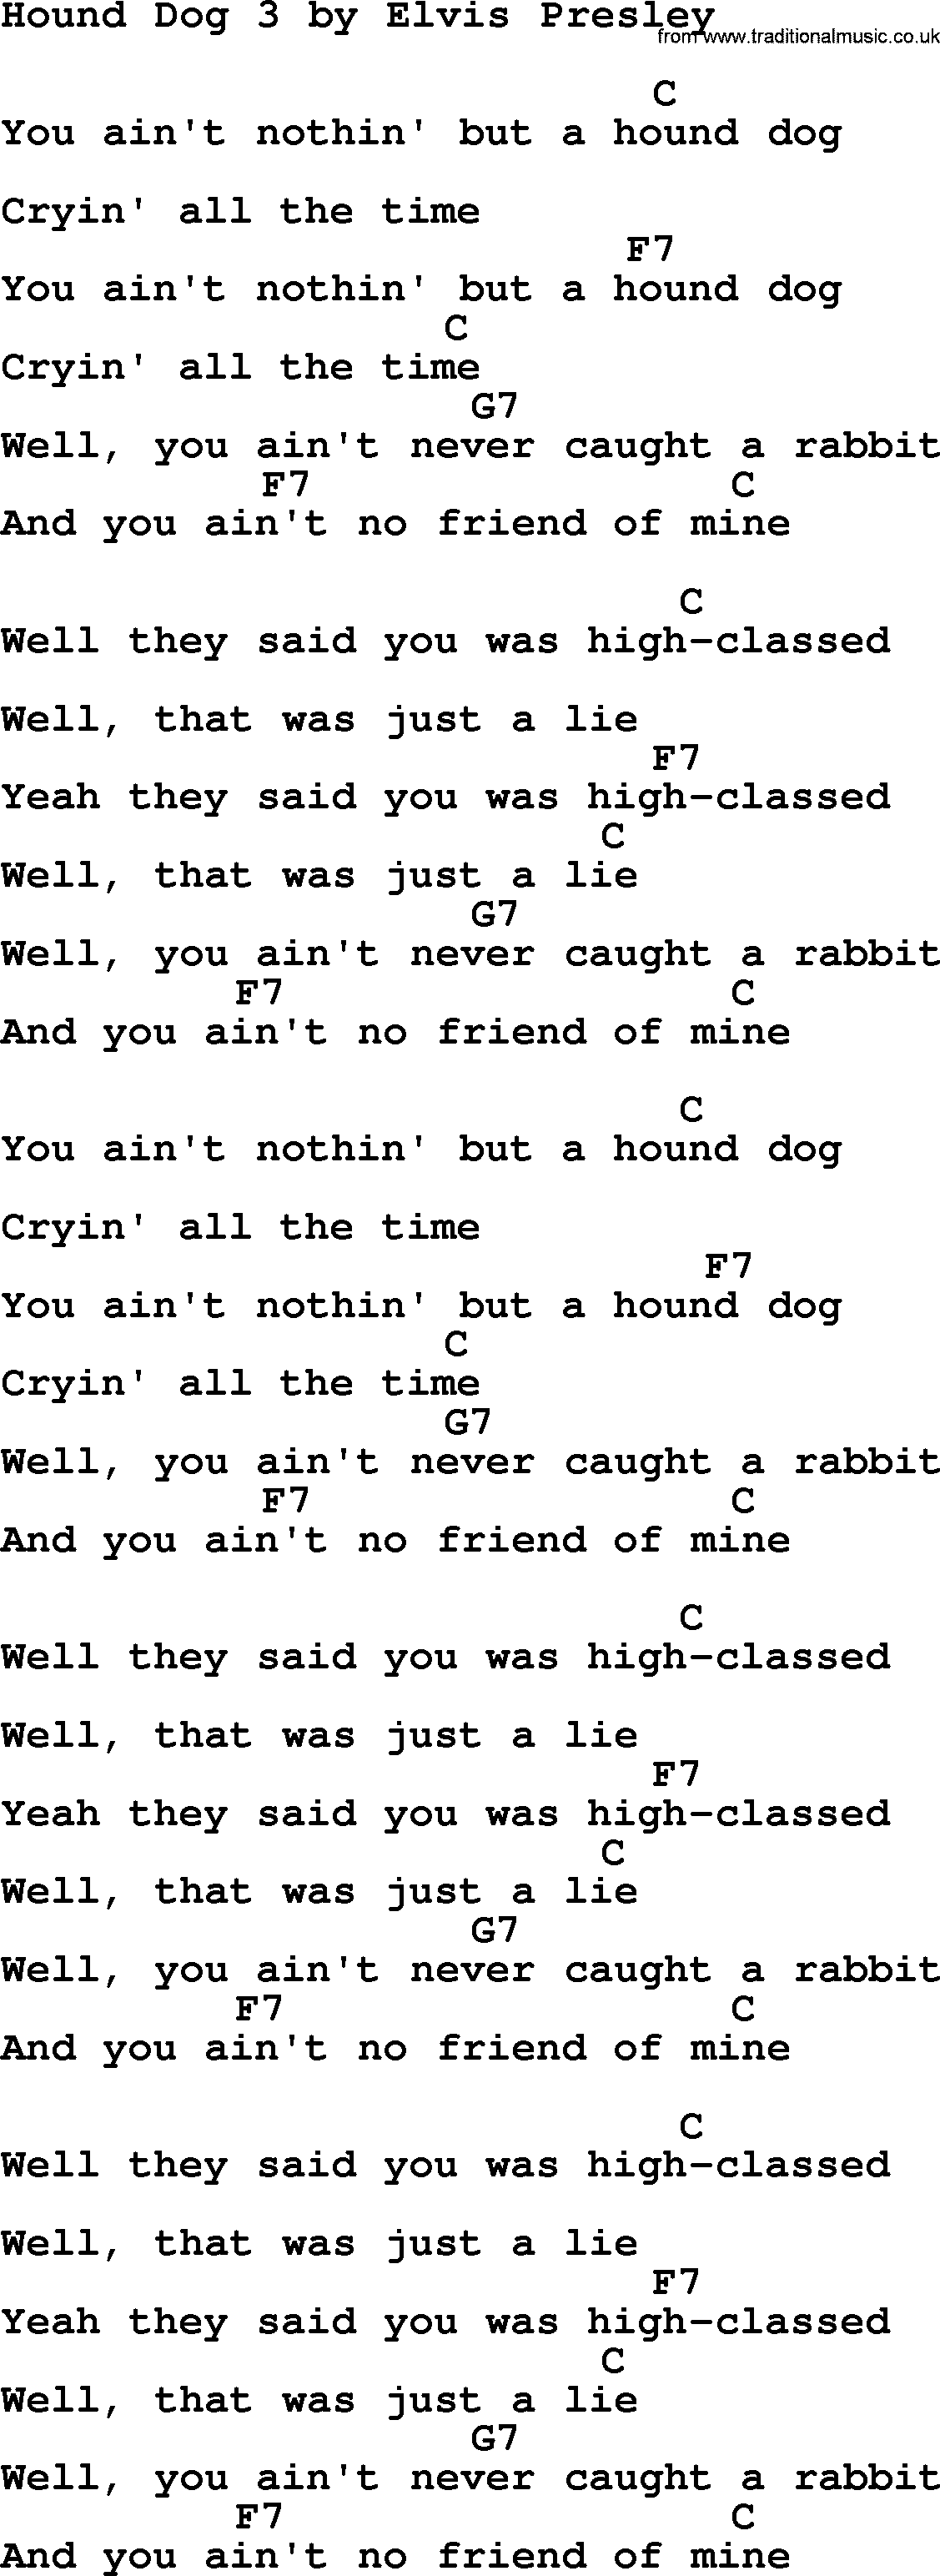 Elvis Presley song: Hound Dog 3, lyrics and chords